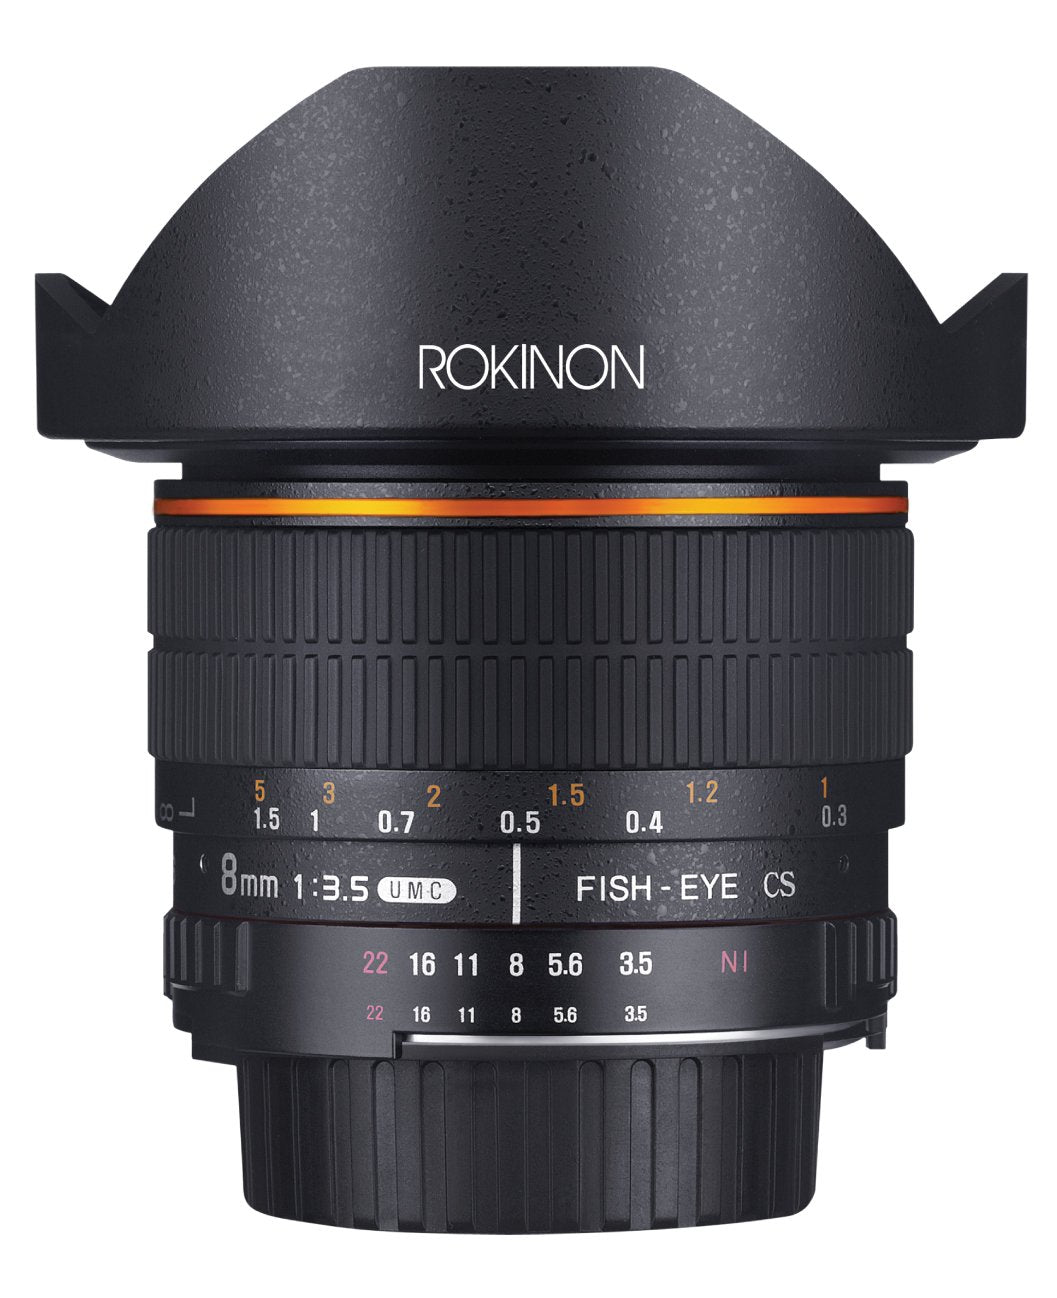 Rokinon 8mm F3.5 Fisheye Lens for Sony E